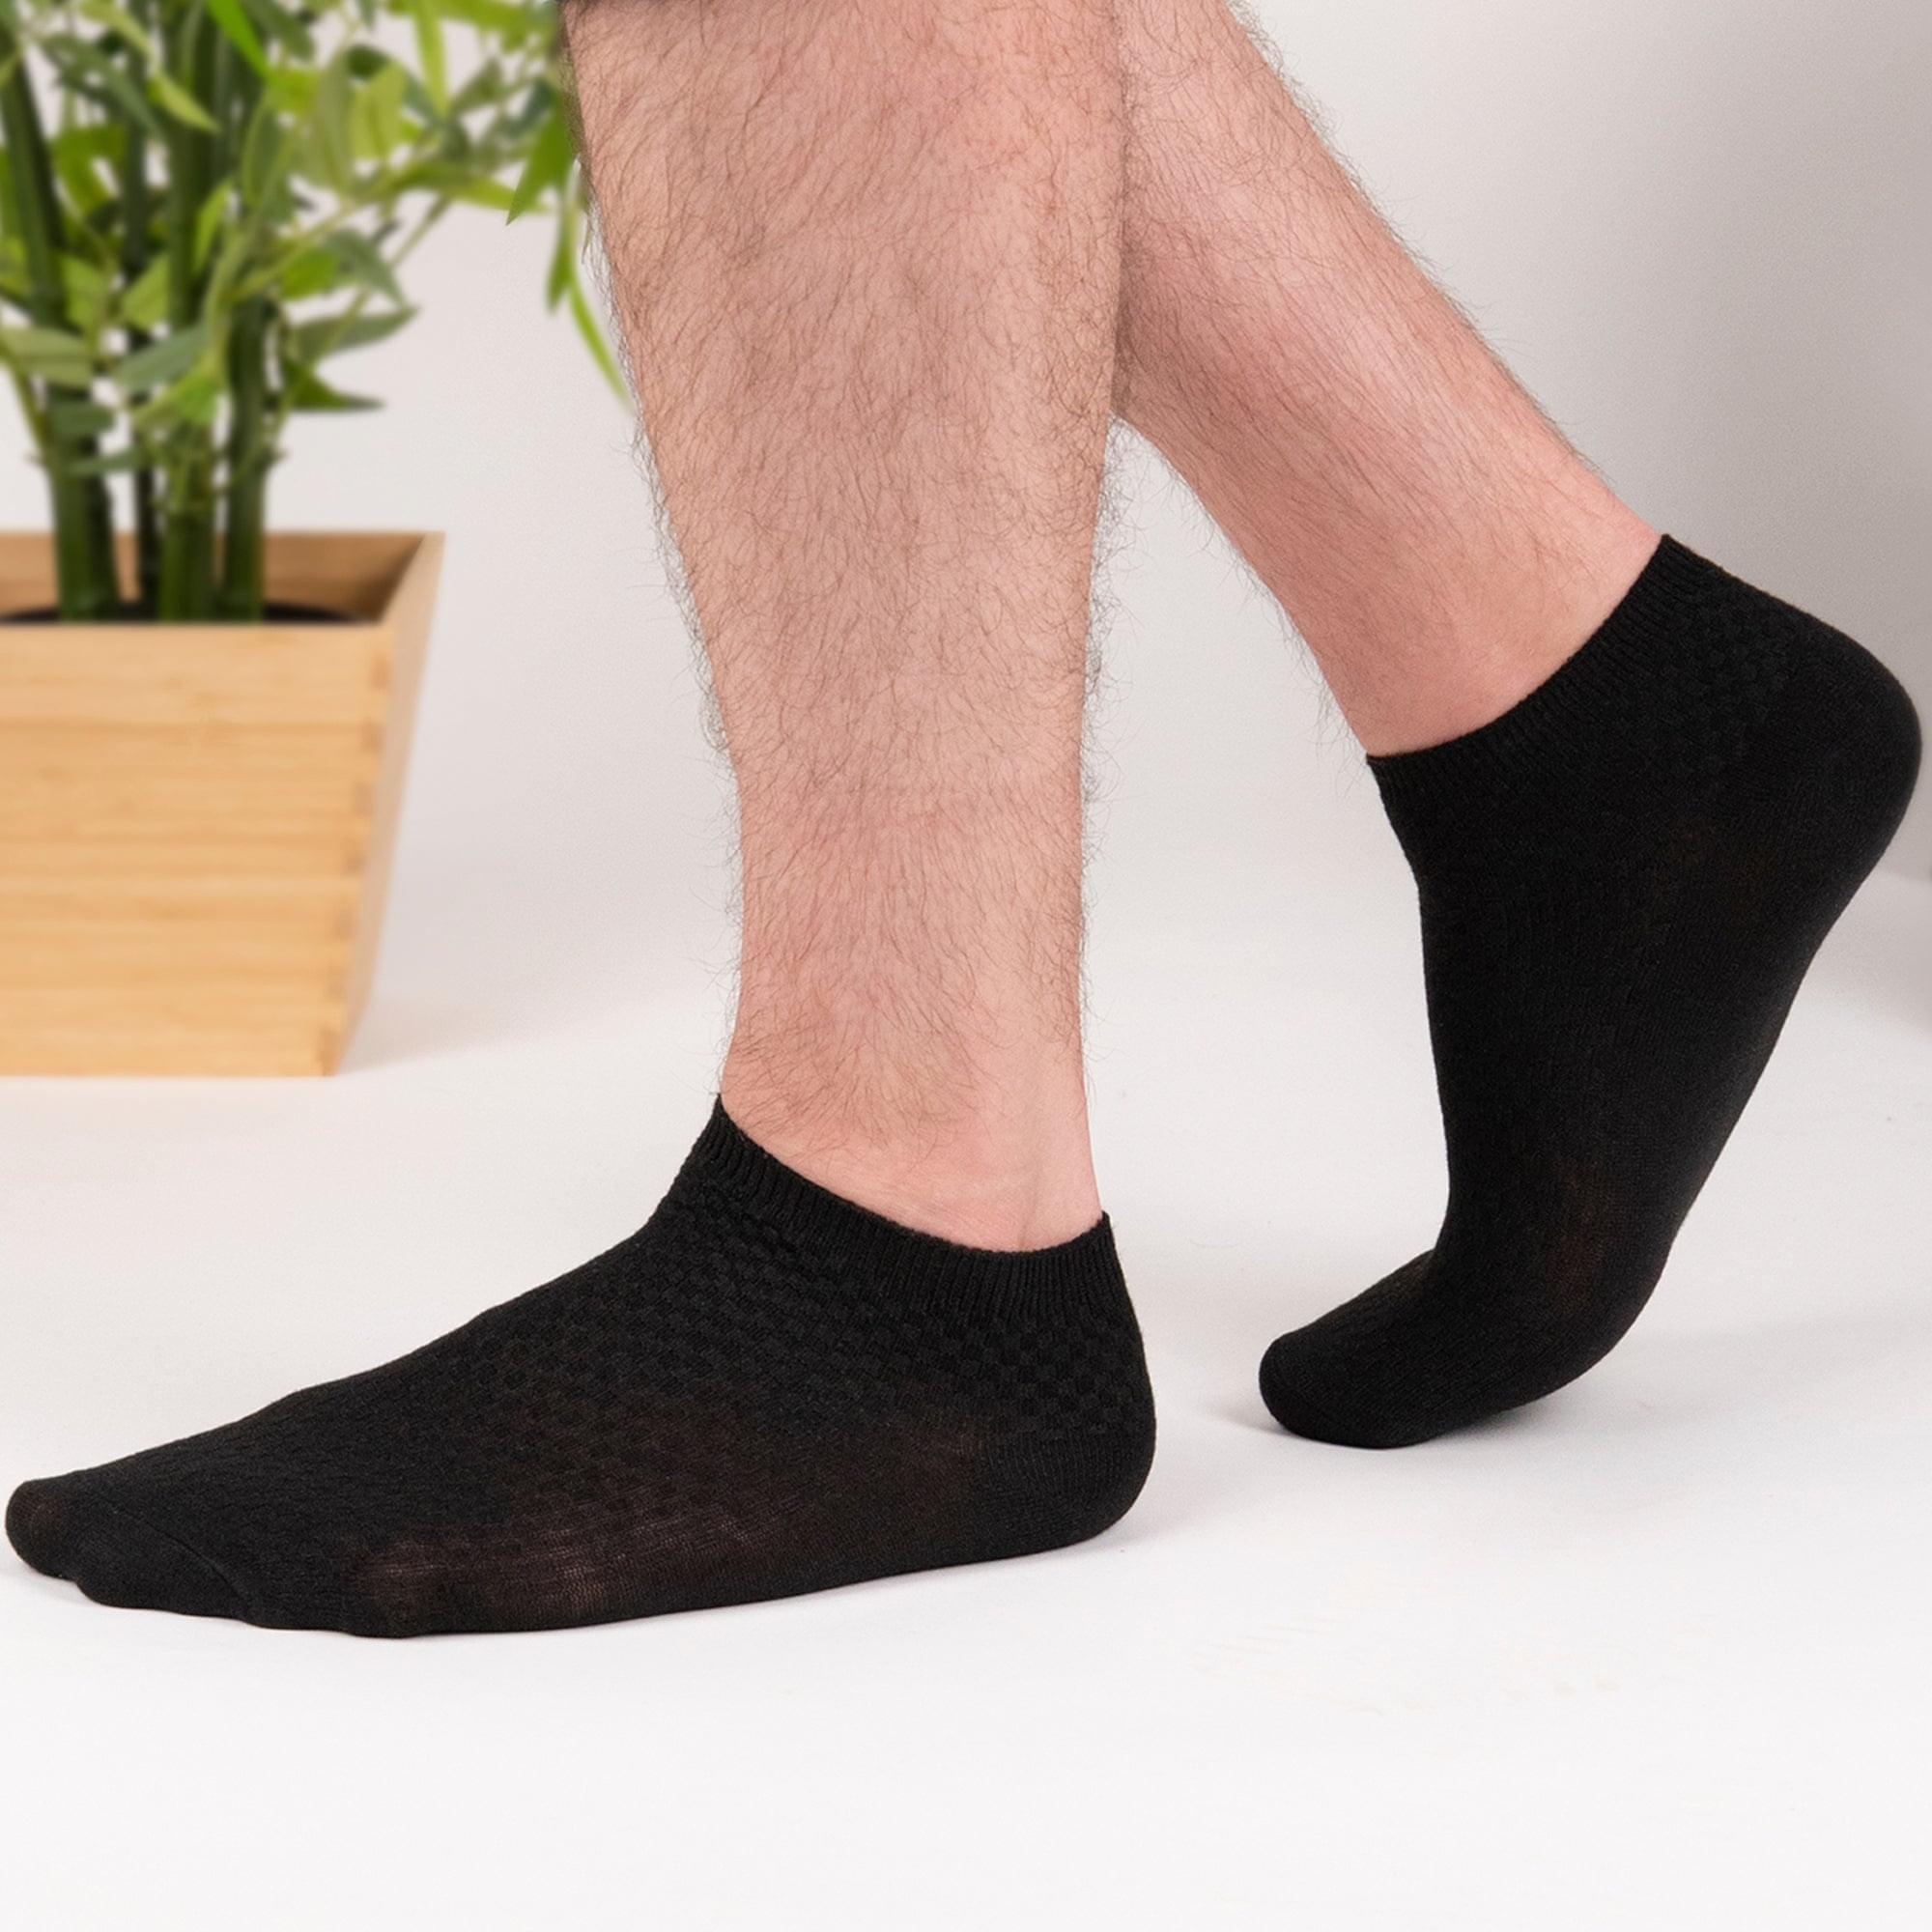 "VORBESTELLER" Sneaker Socken - Die Schwarzen